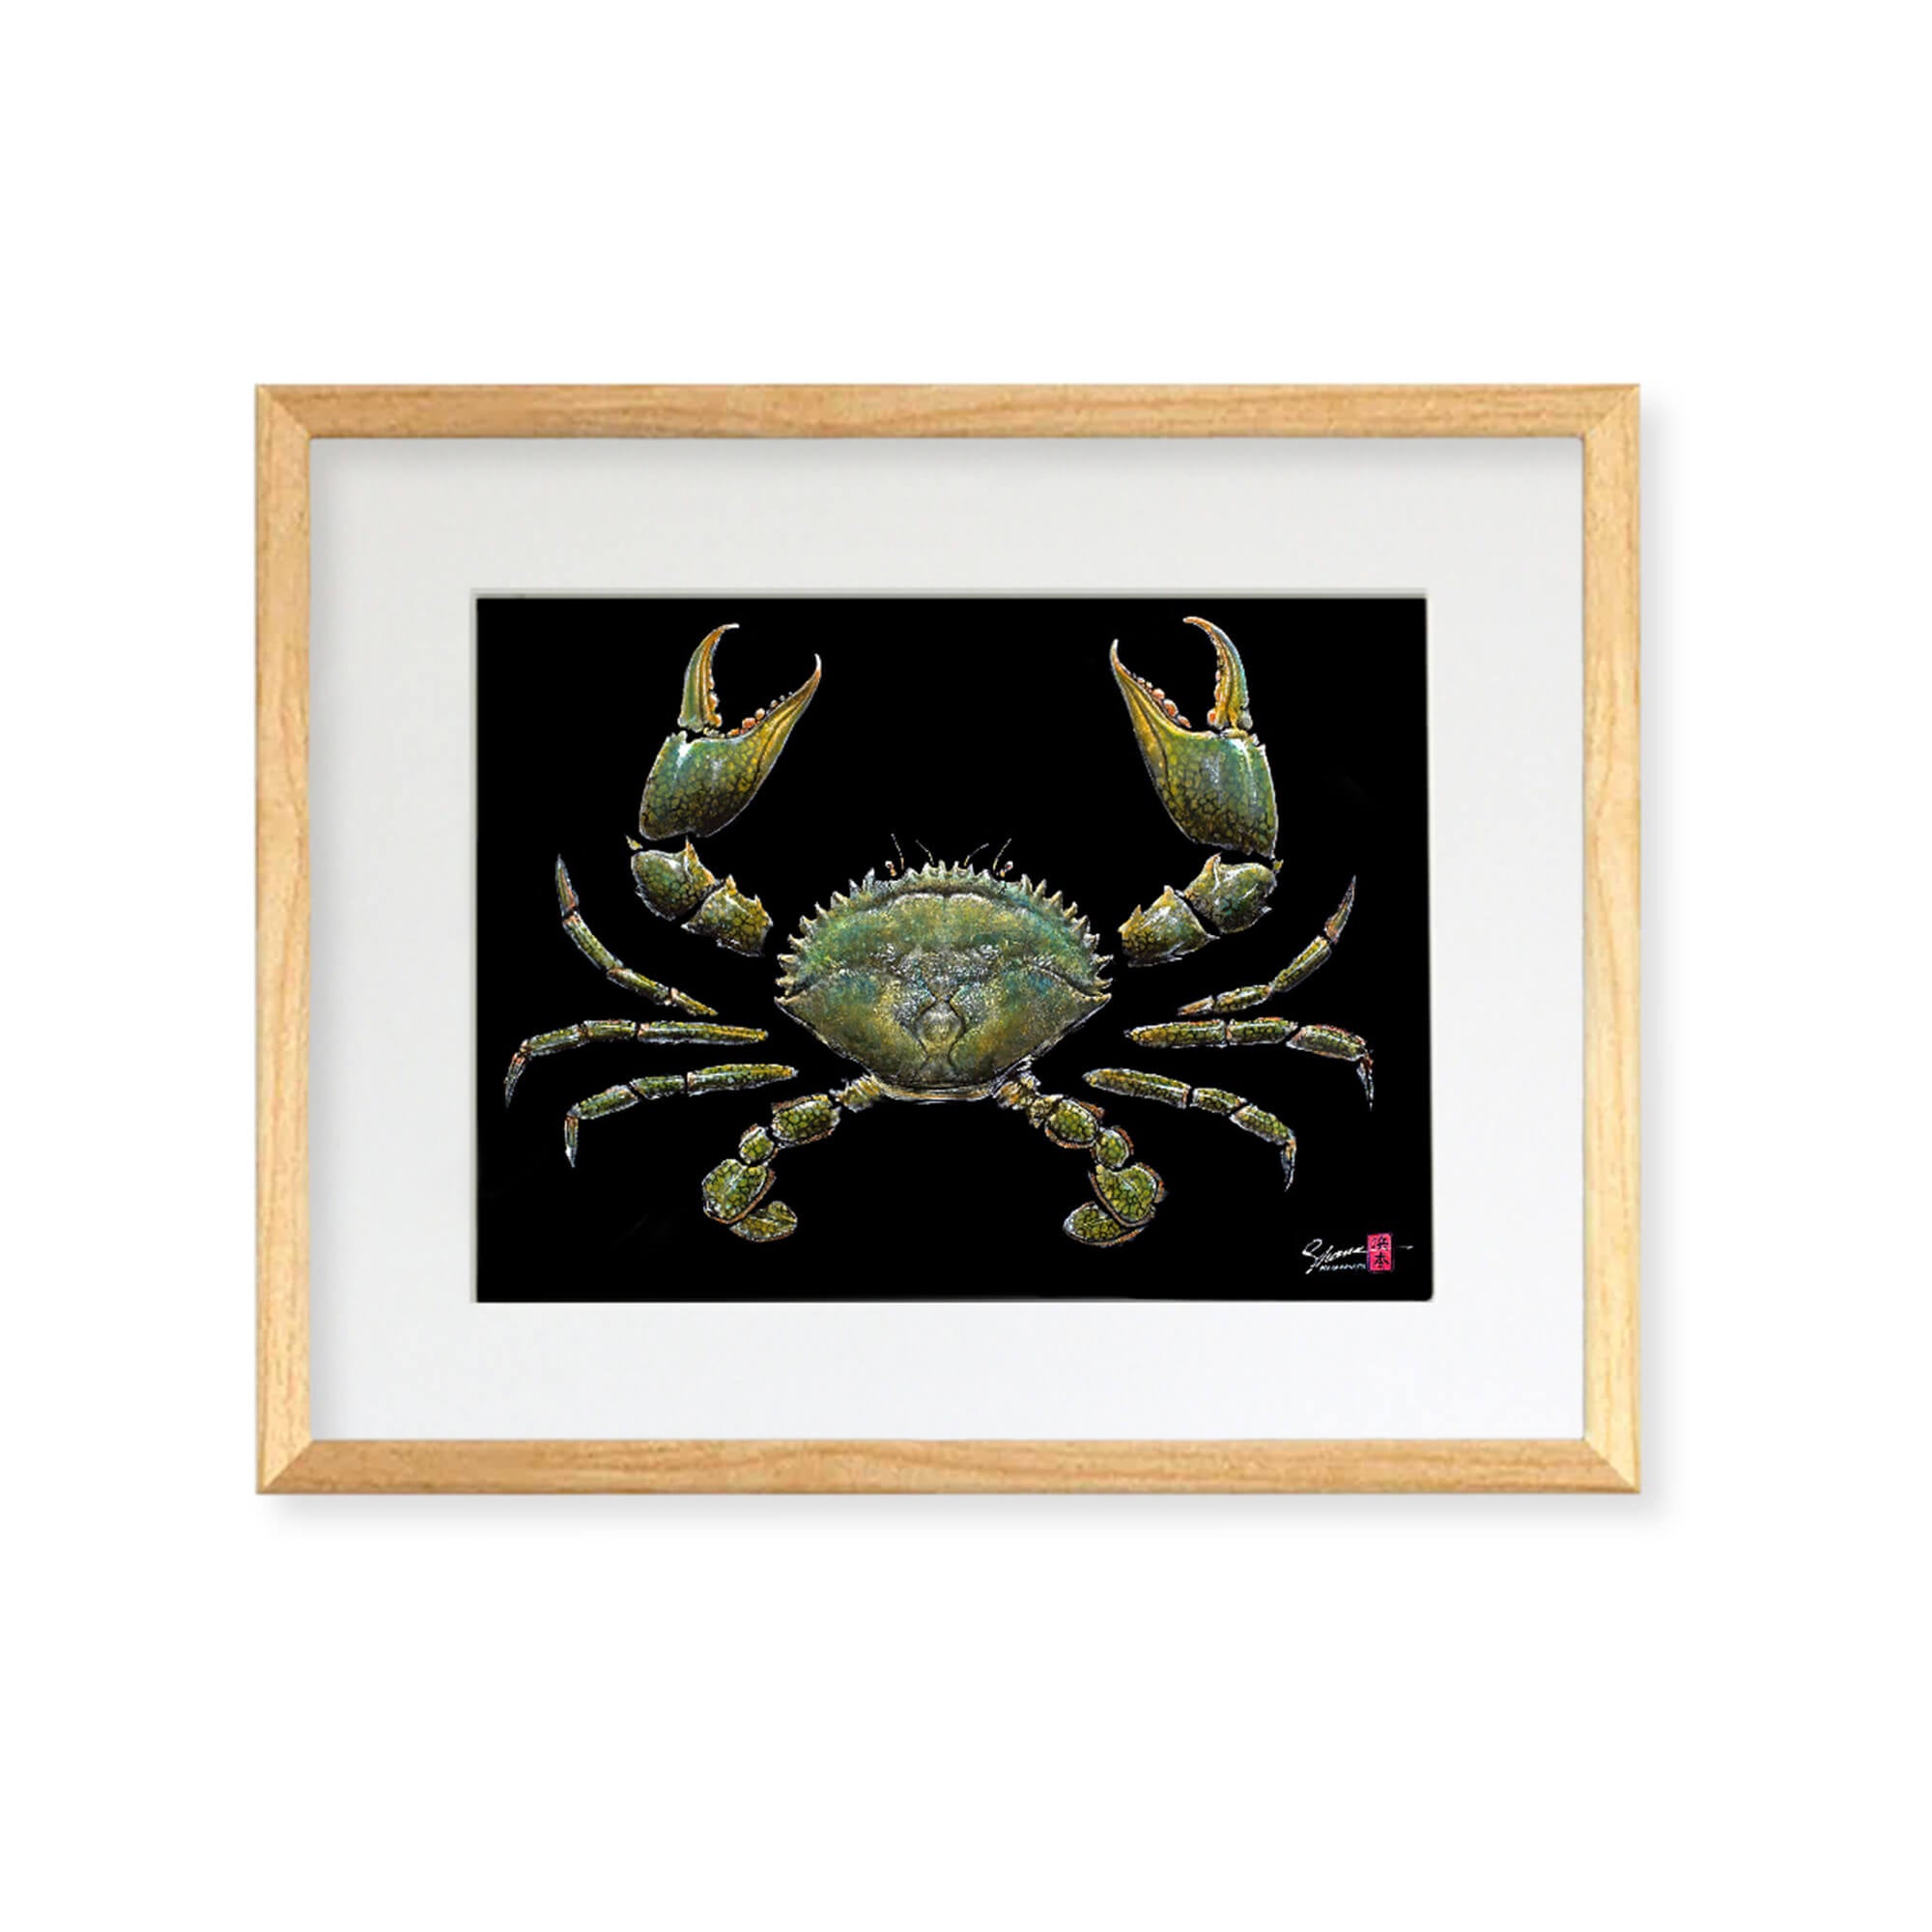 Framed matted print of Samoan Crab in black frame by Hawaii gyotaku artist Shane Hamamoto